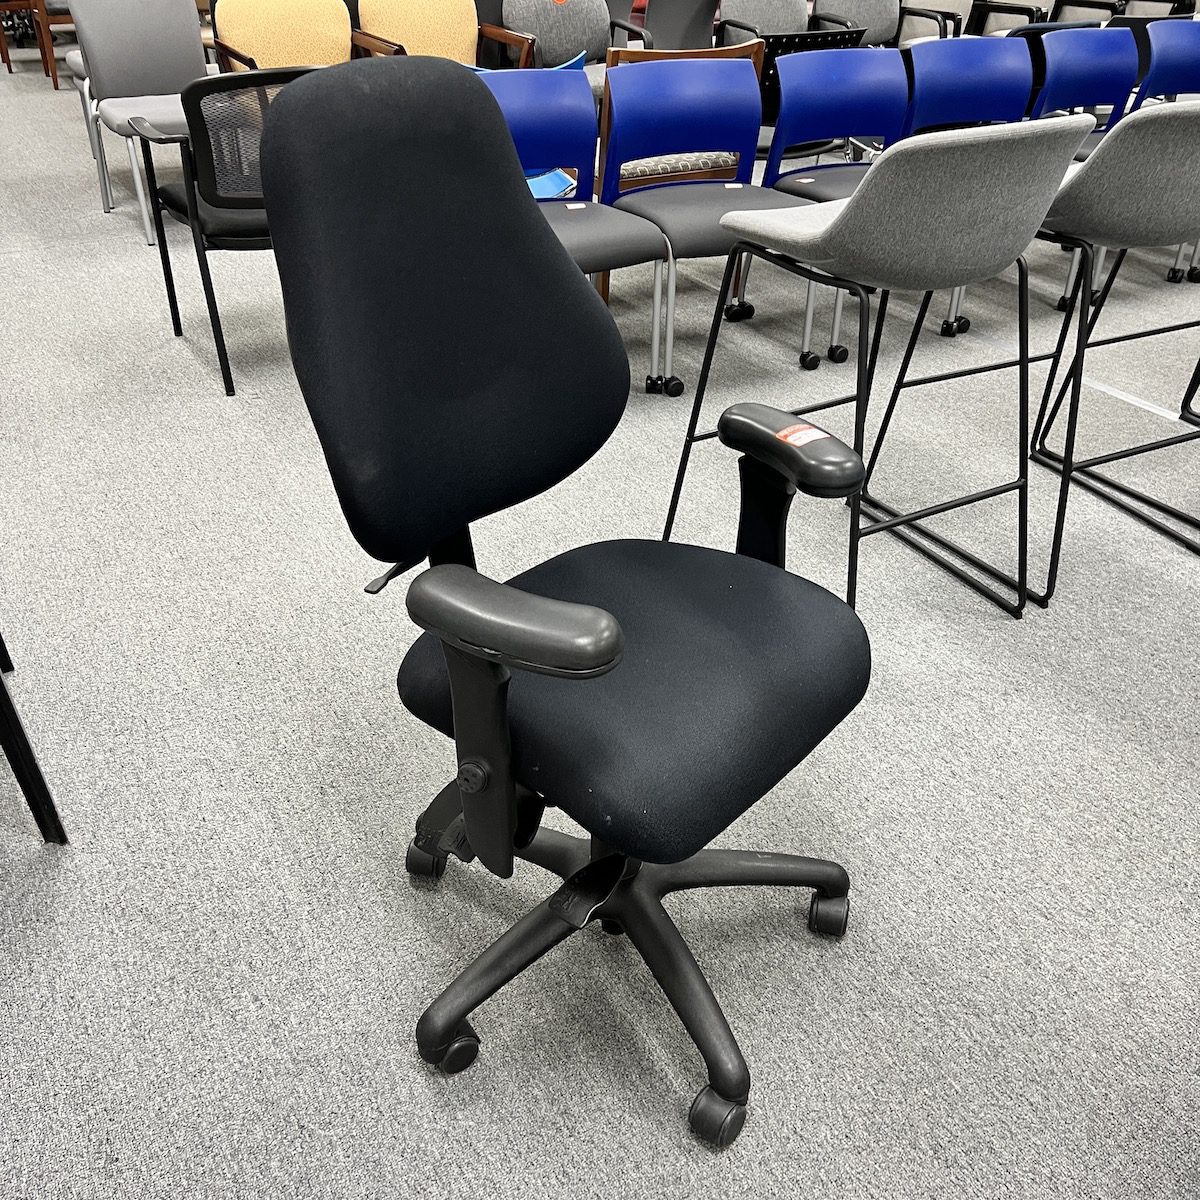 Black Neutral Posture Task Chair